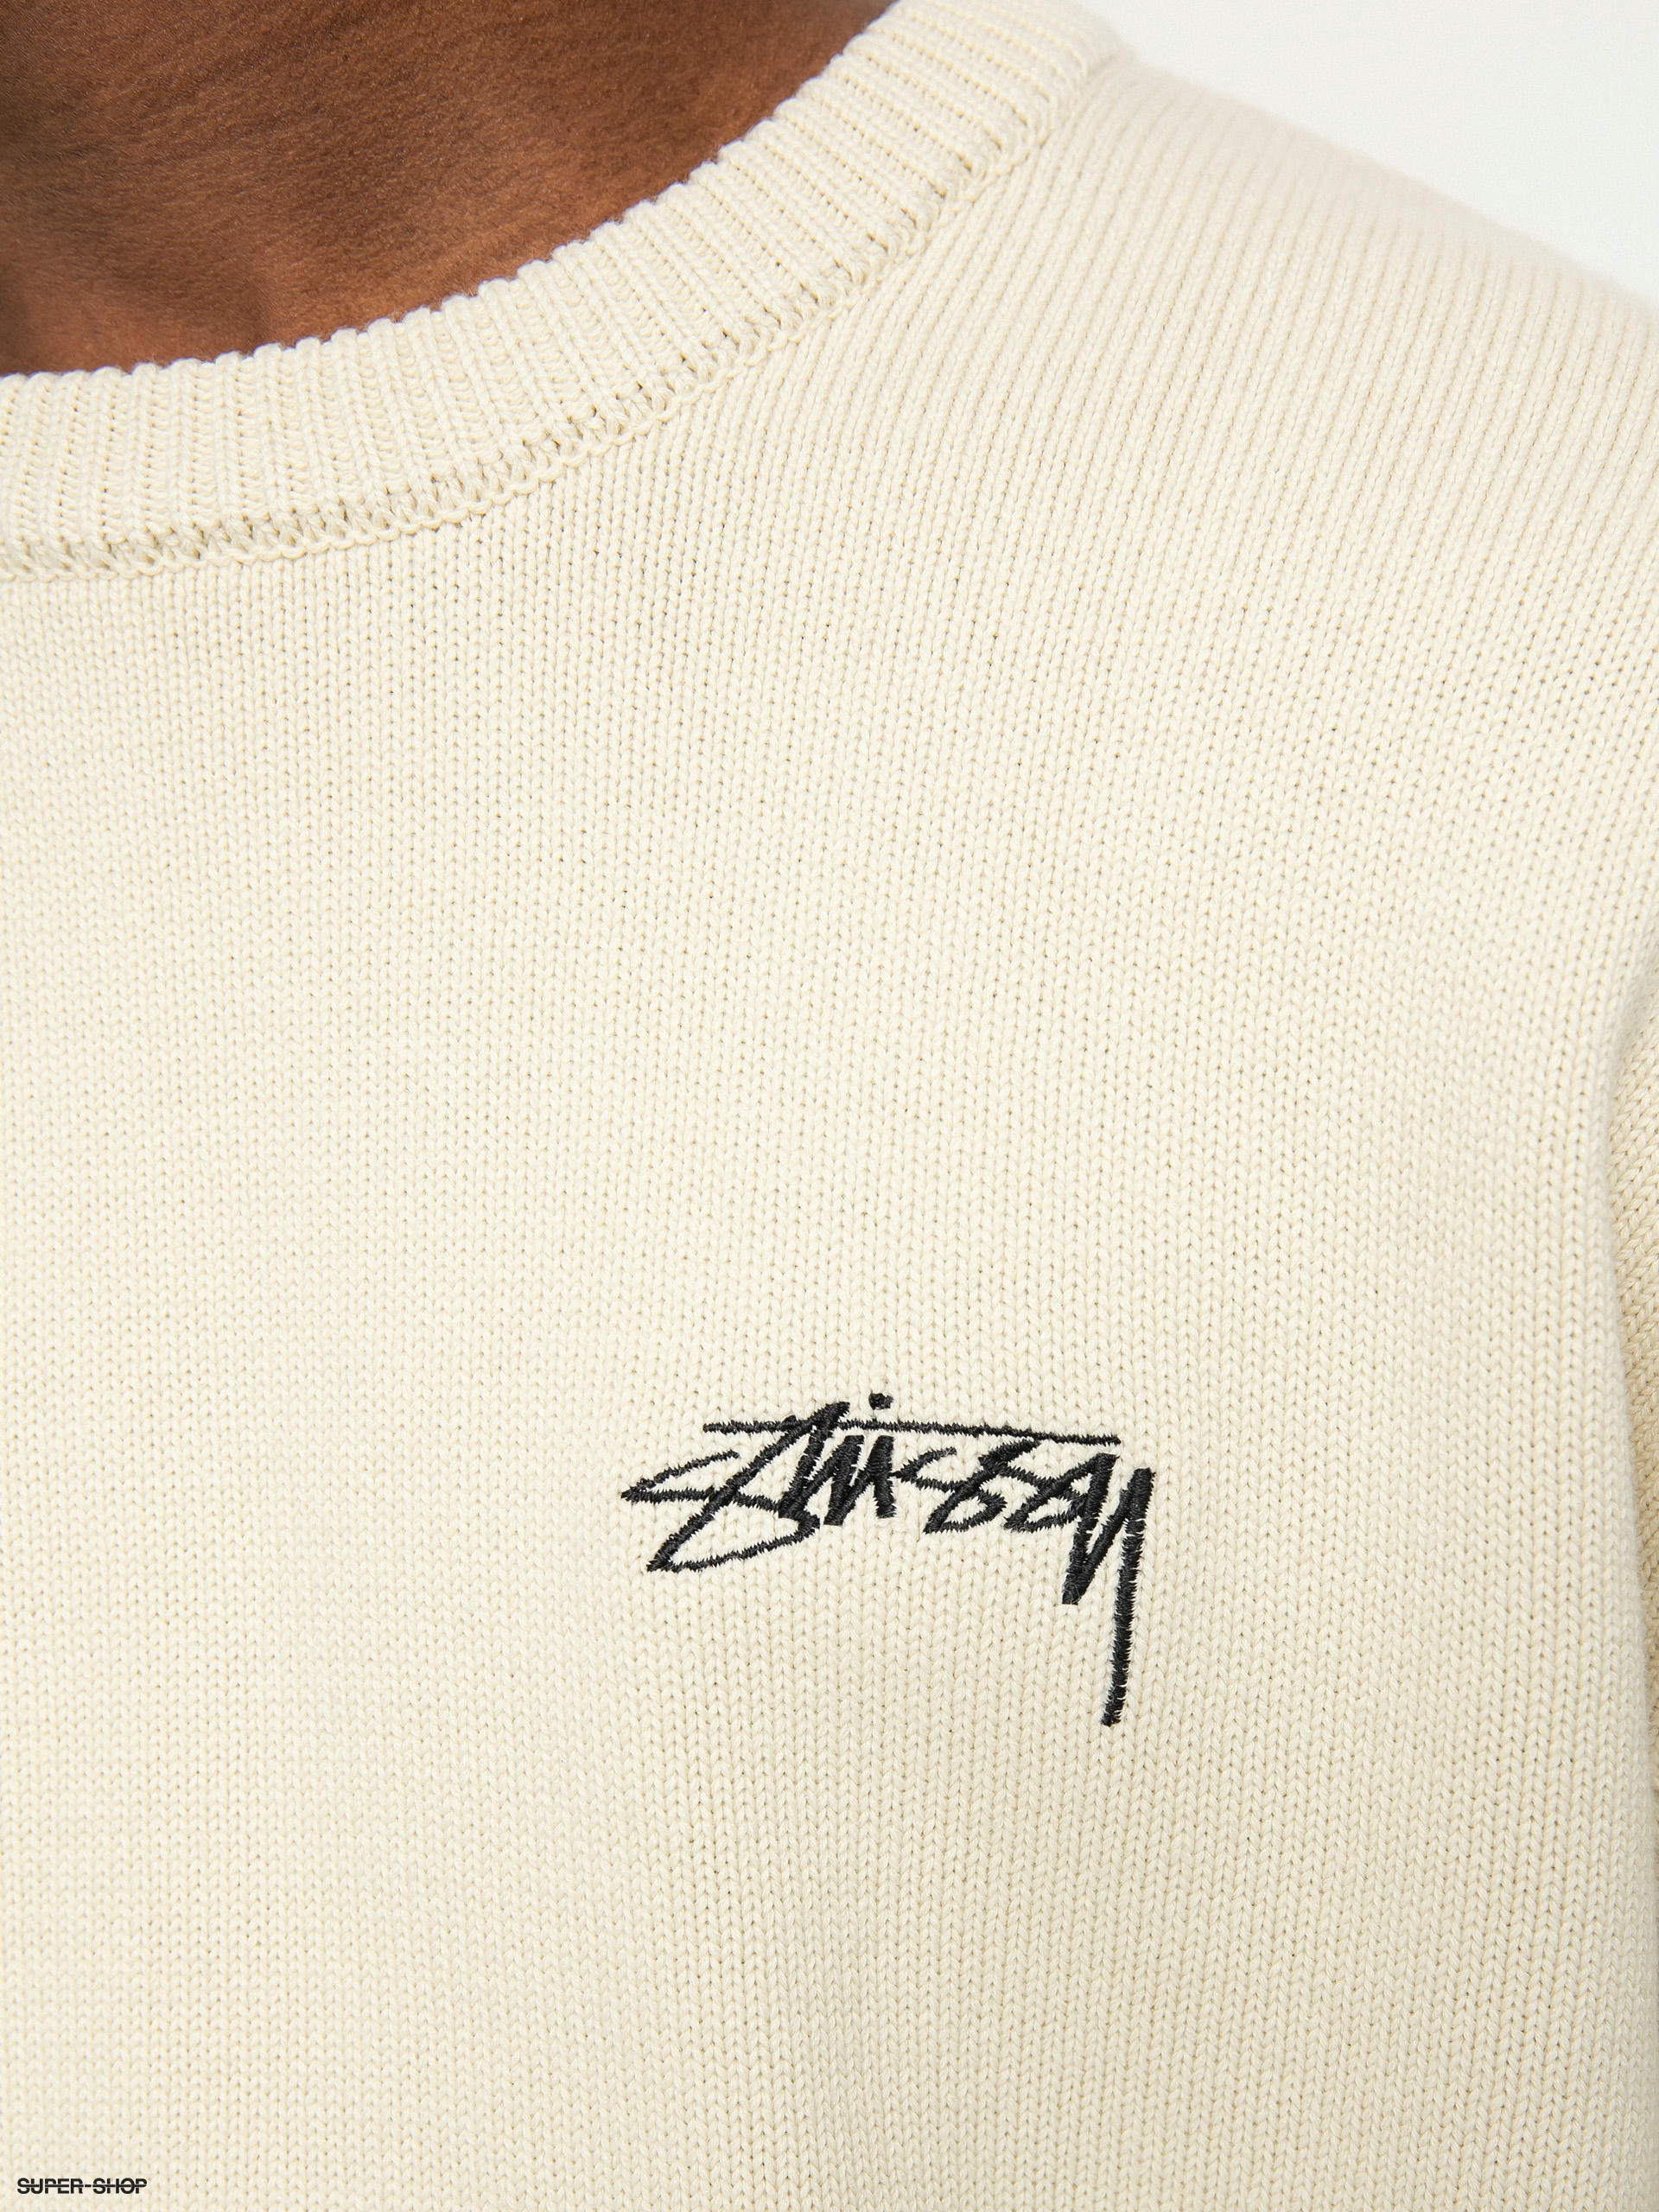 Stussy Care Label Sweater ナチュラル+spbgp44.ru